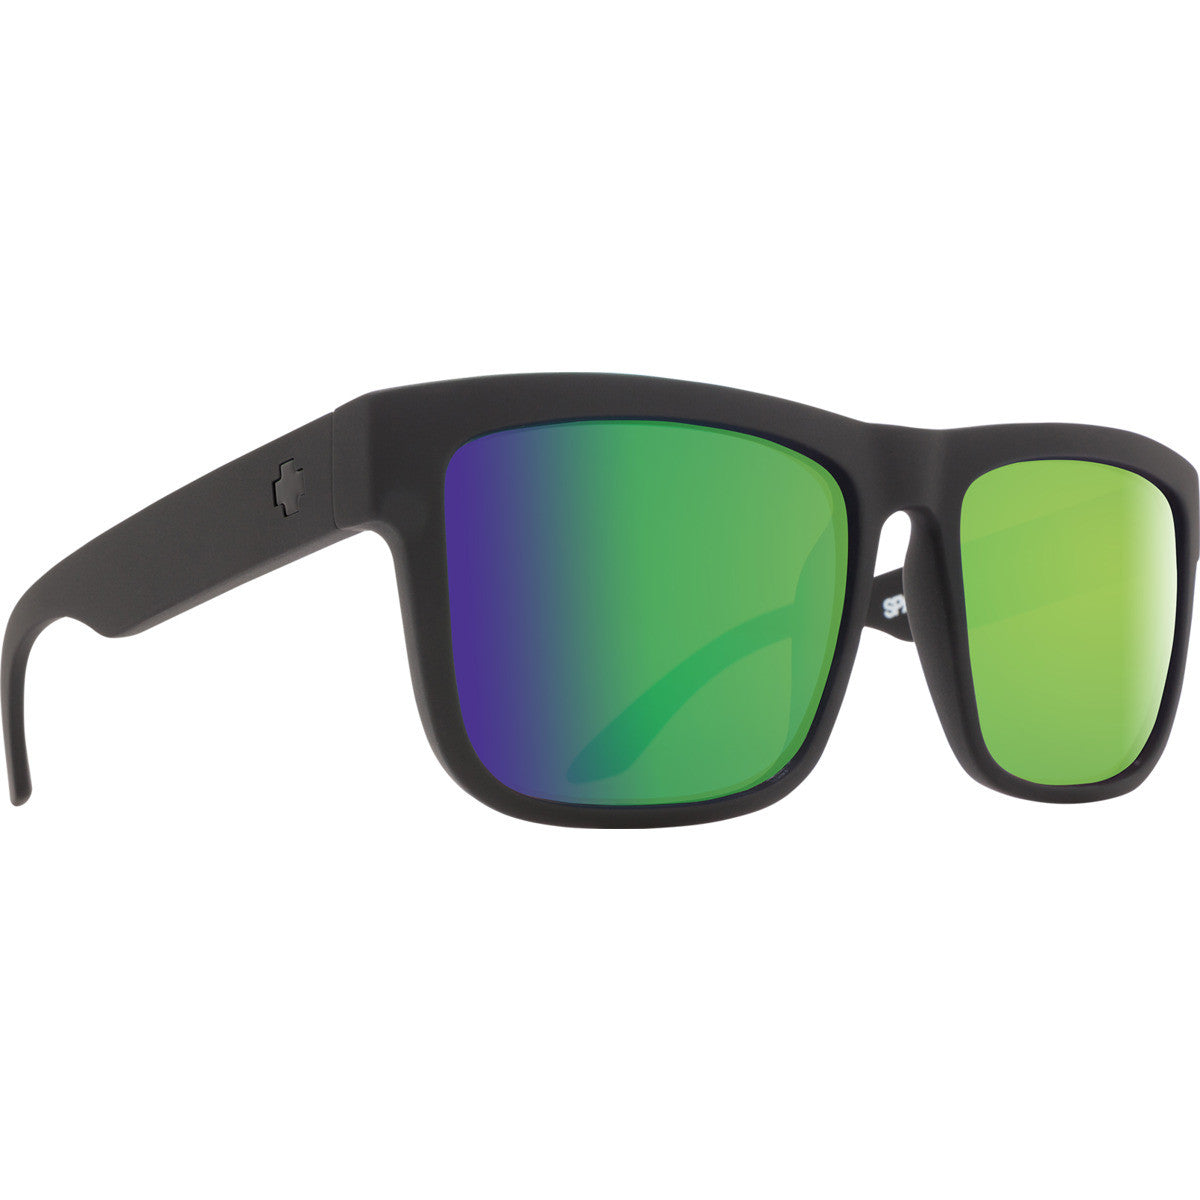 Spy Discord Sunglasses  Black Matte 57-17-145 M-L 54-61